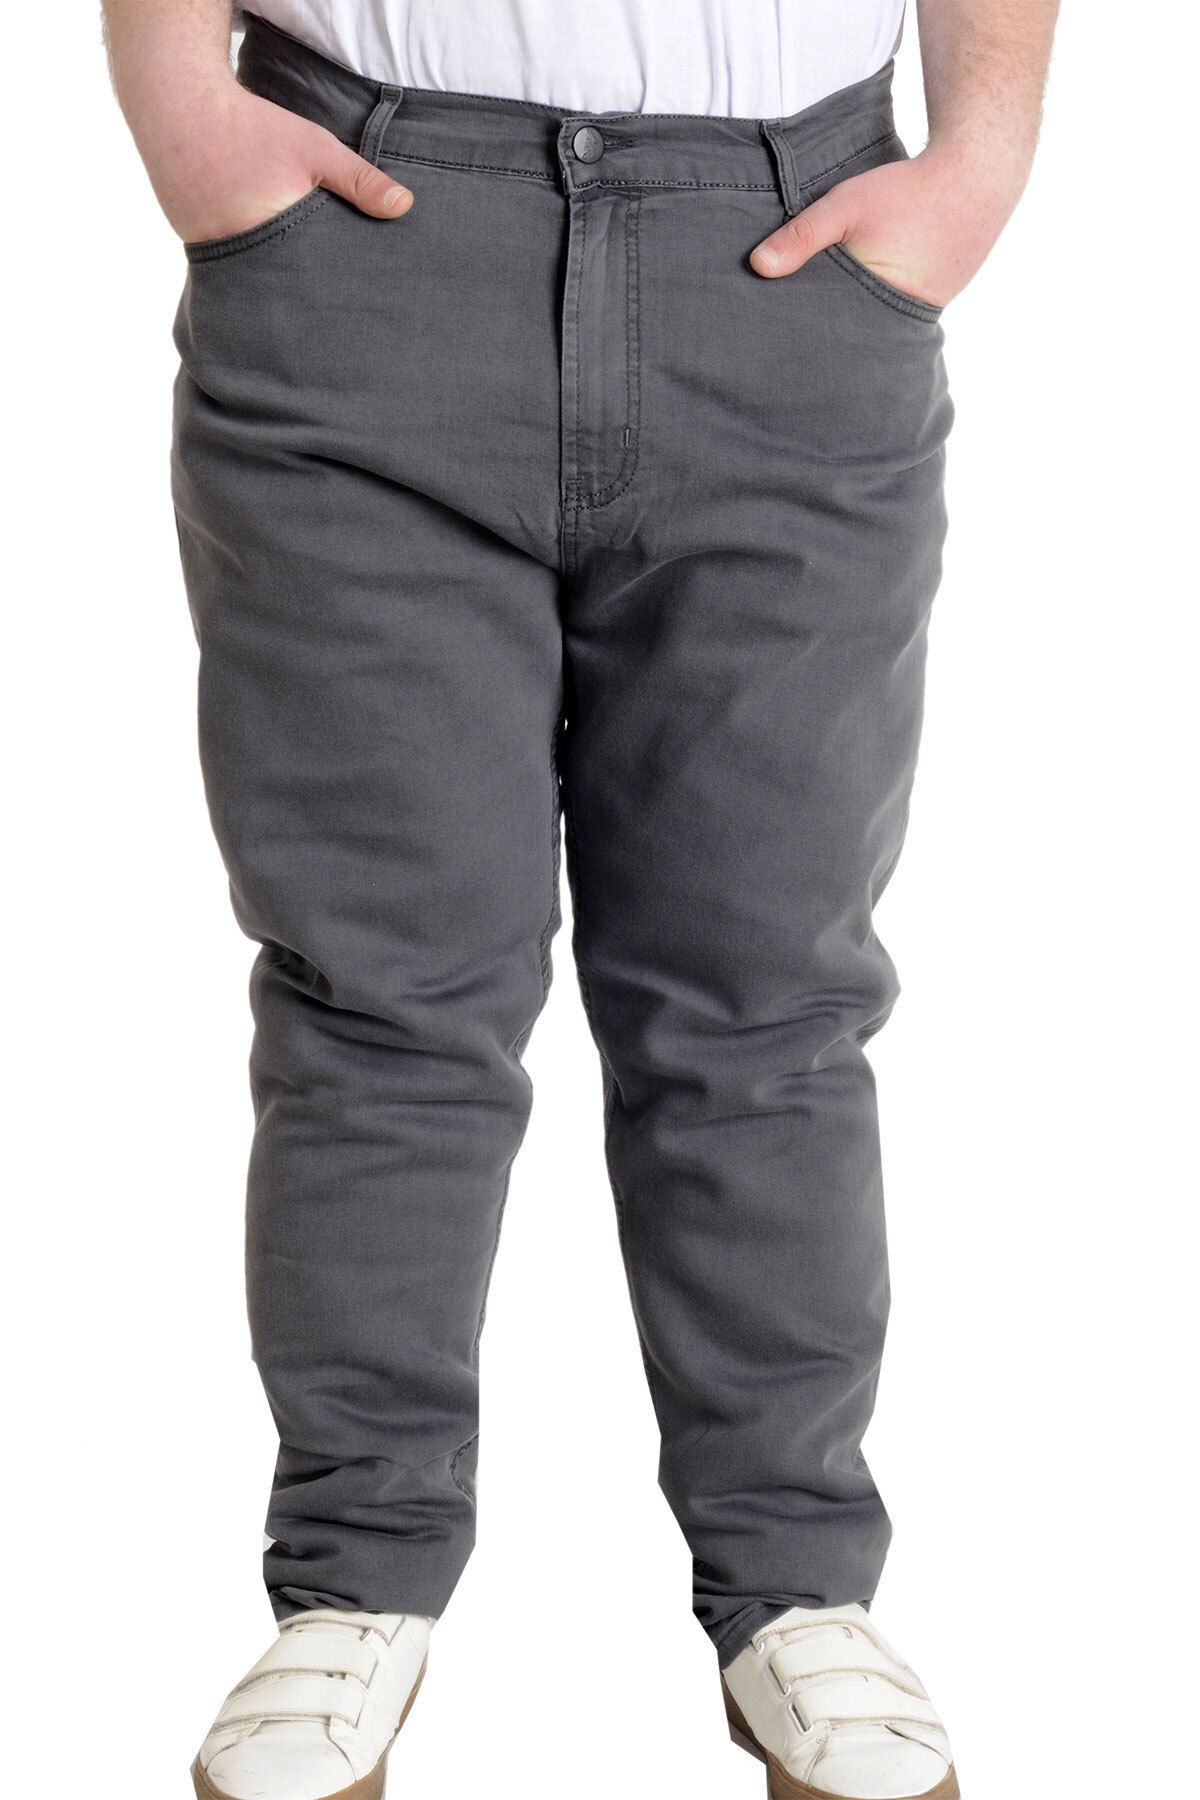 Modexl Mode Xl Büyük Beden Erkek Pantolon Kot Klasik 5cep Focus 23904 Gri